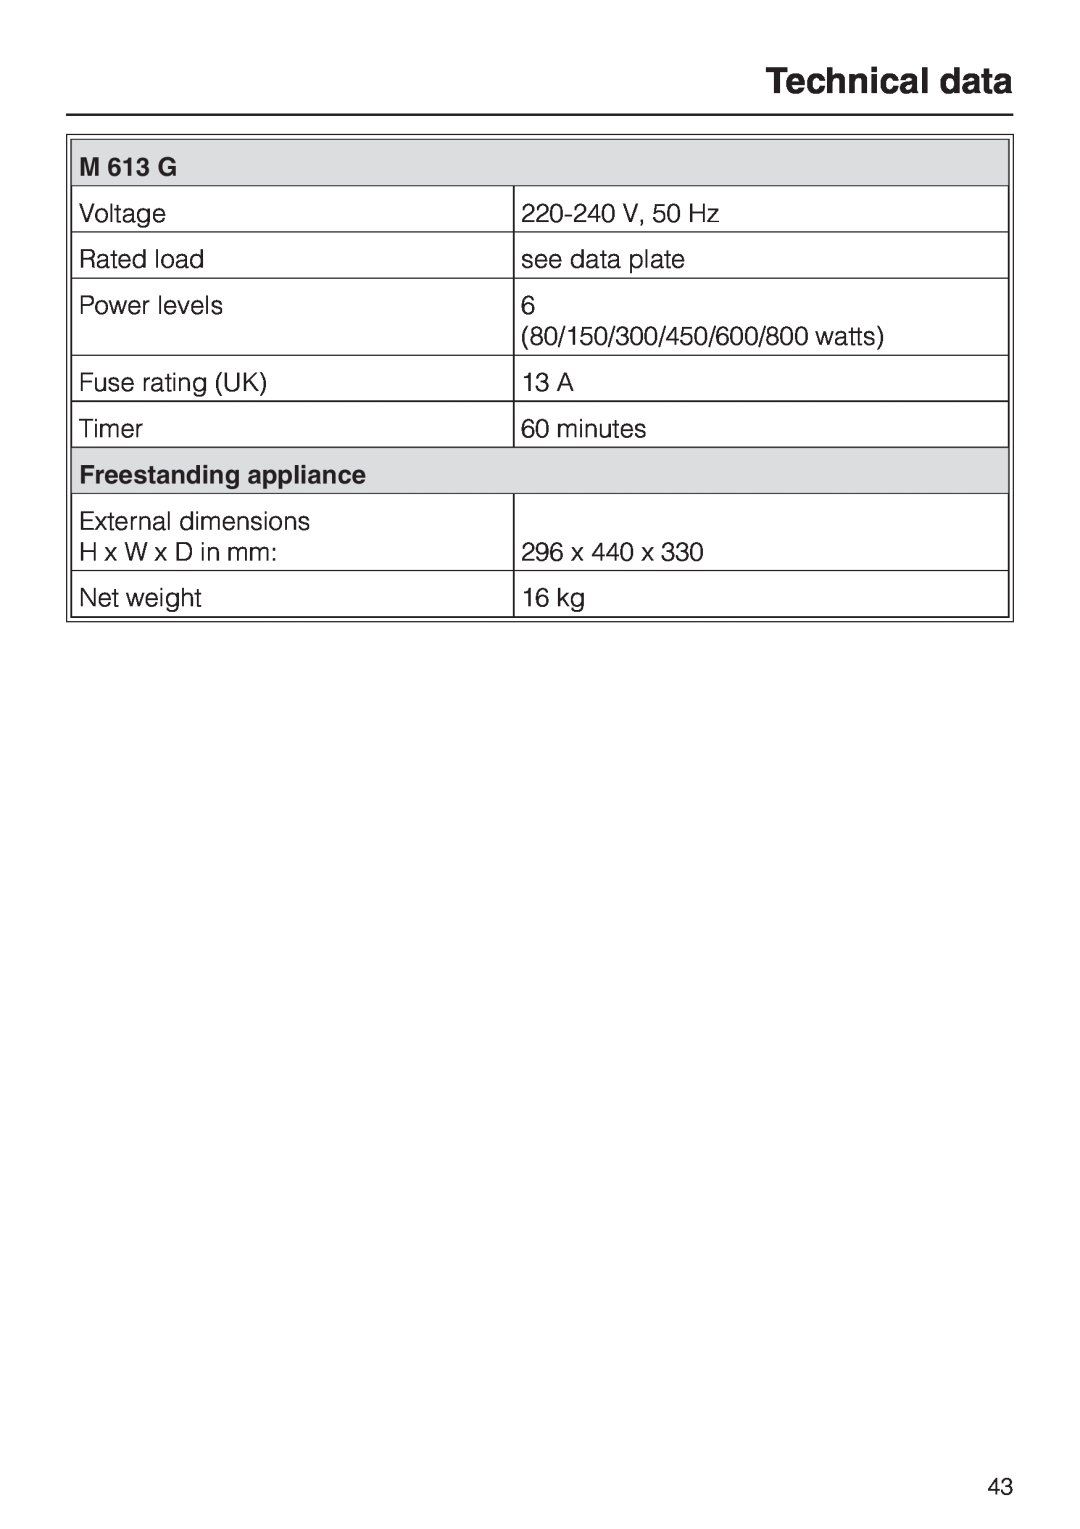 Miele M 613 G manual Technical data, Freestanding appliance 